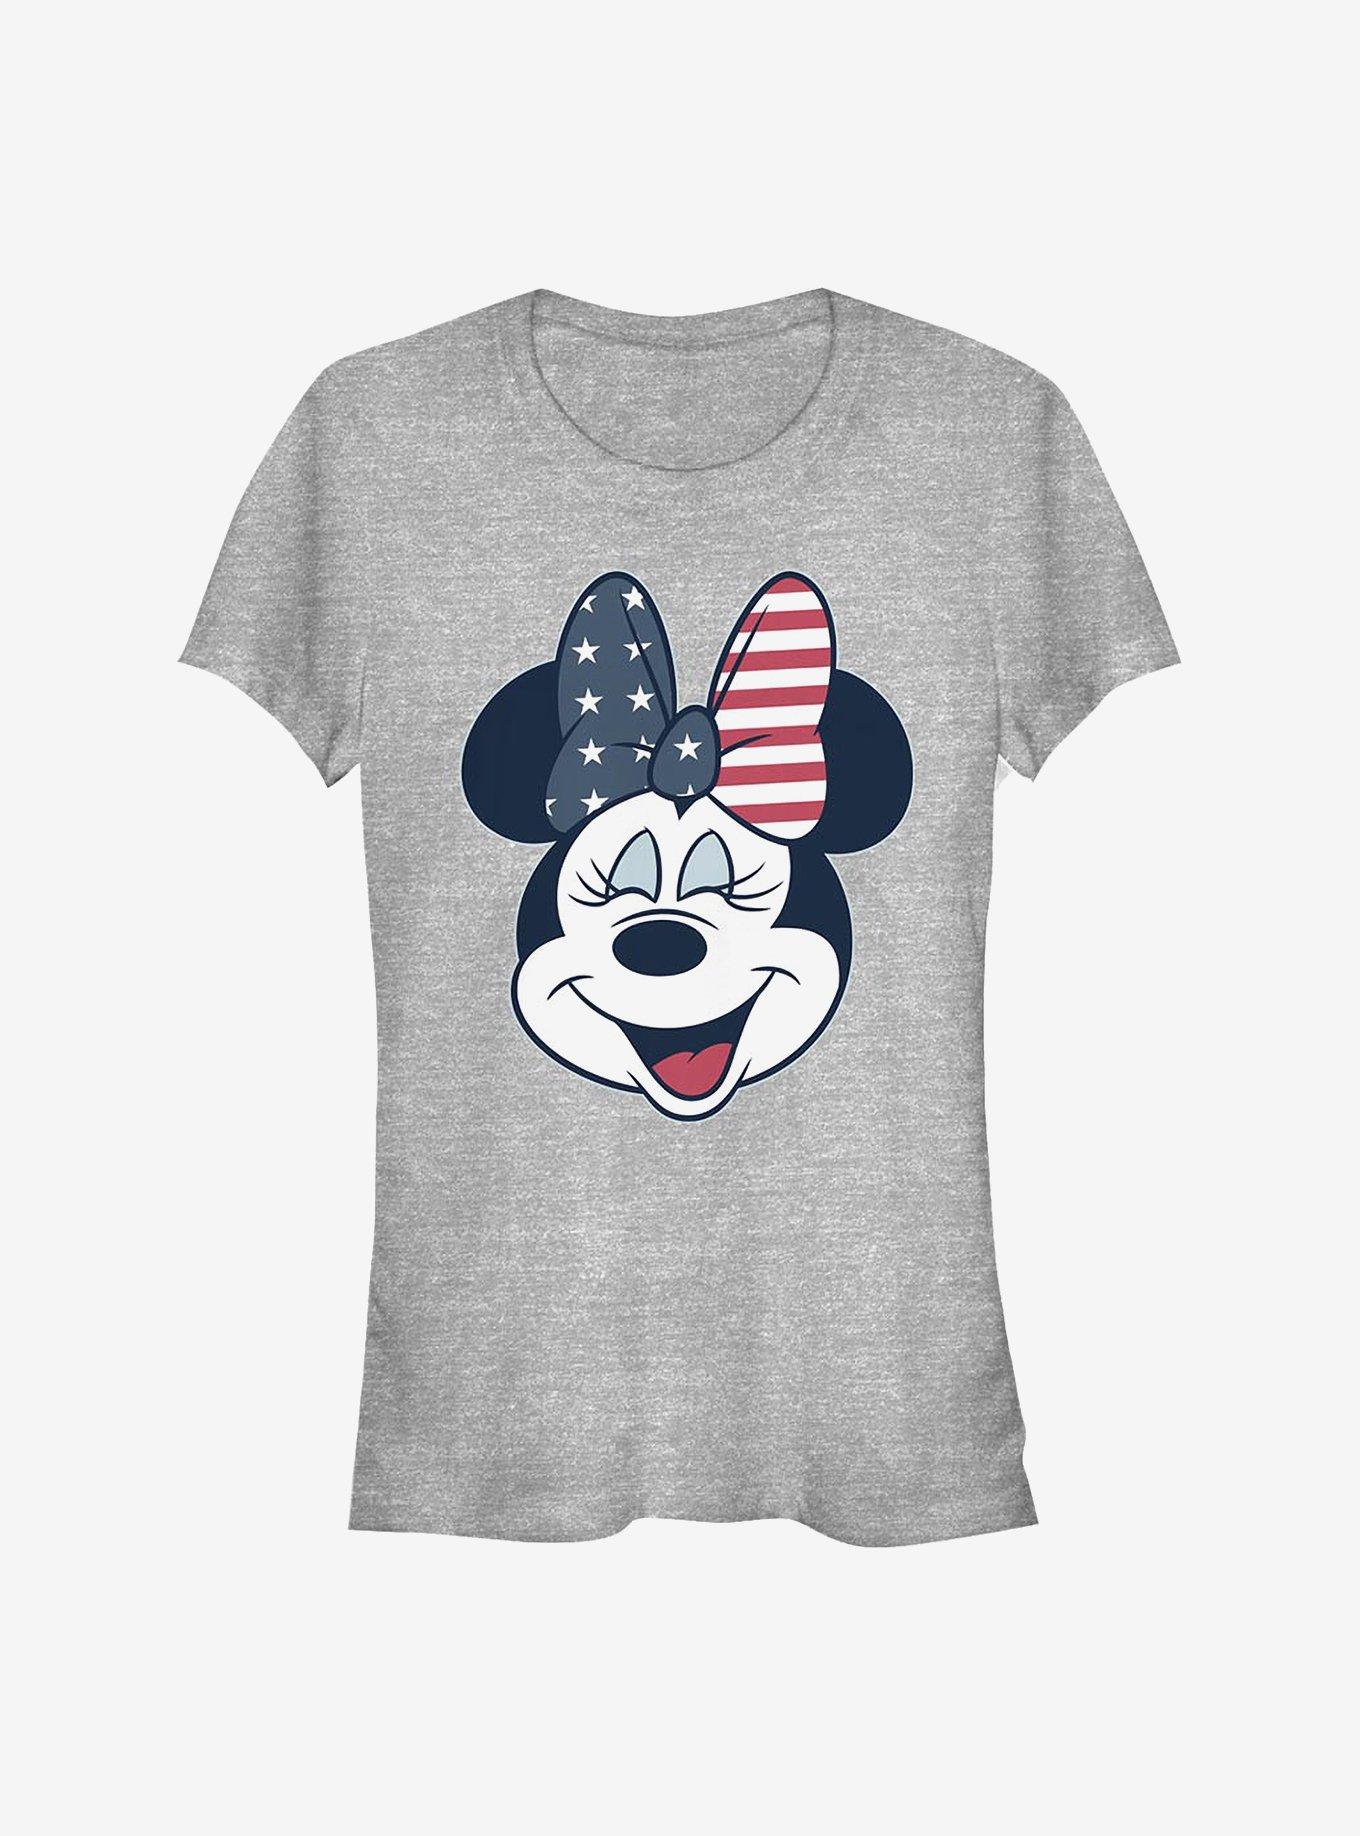 Disney Minnie Mouse America Bow Girls T-Shirt